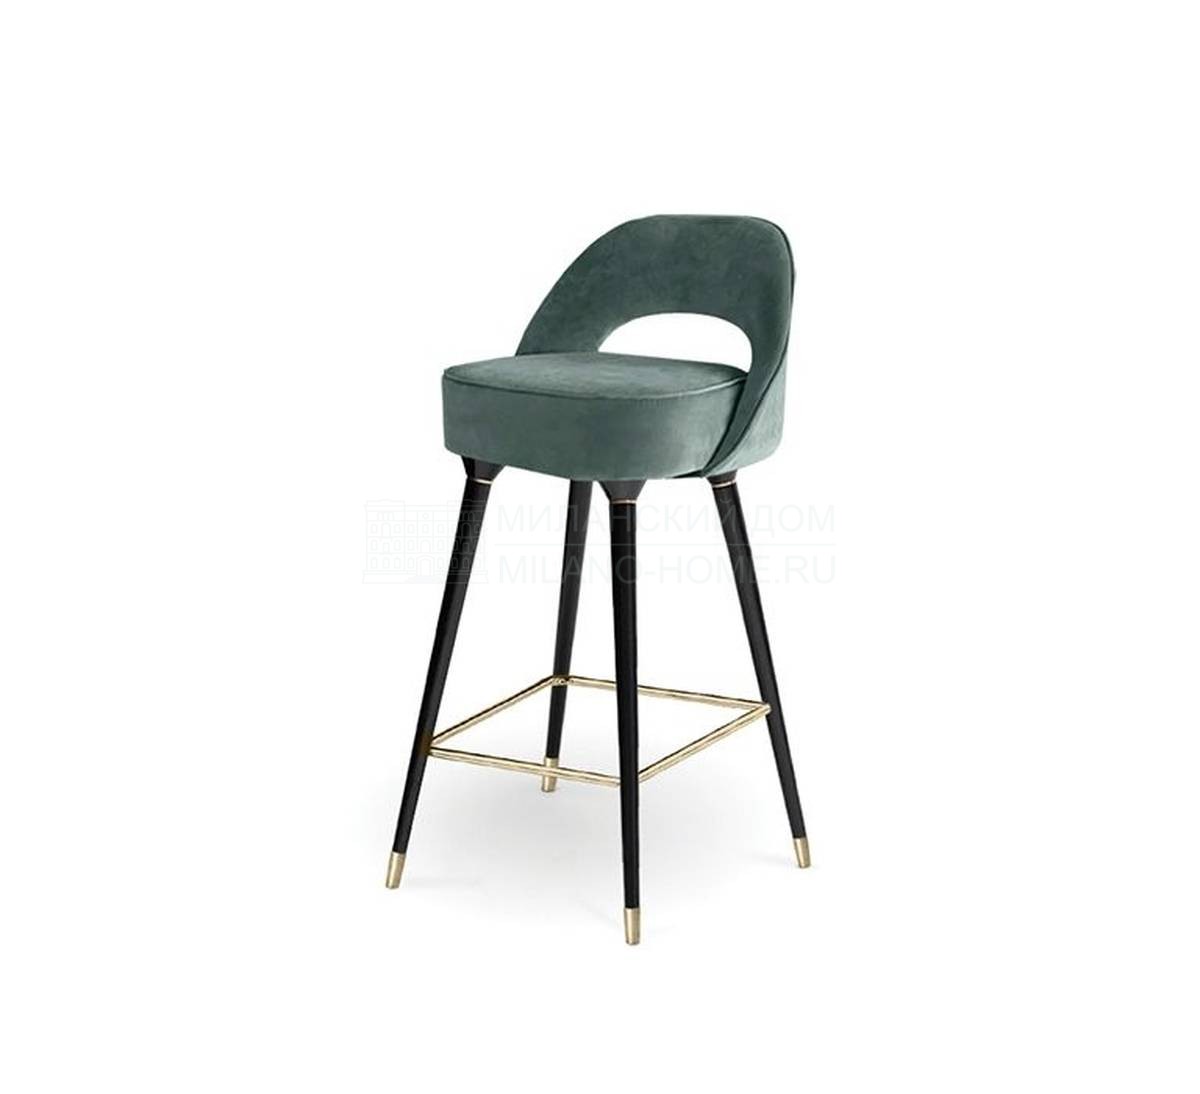 Барный стул Collins/bar-chair из Португалии фабрики DELIGHTFULL